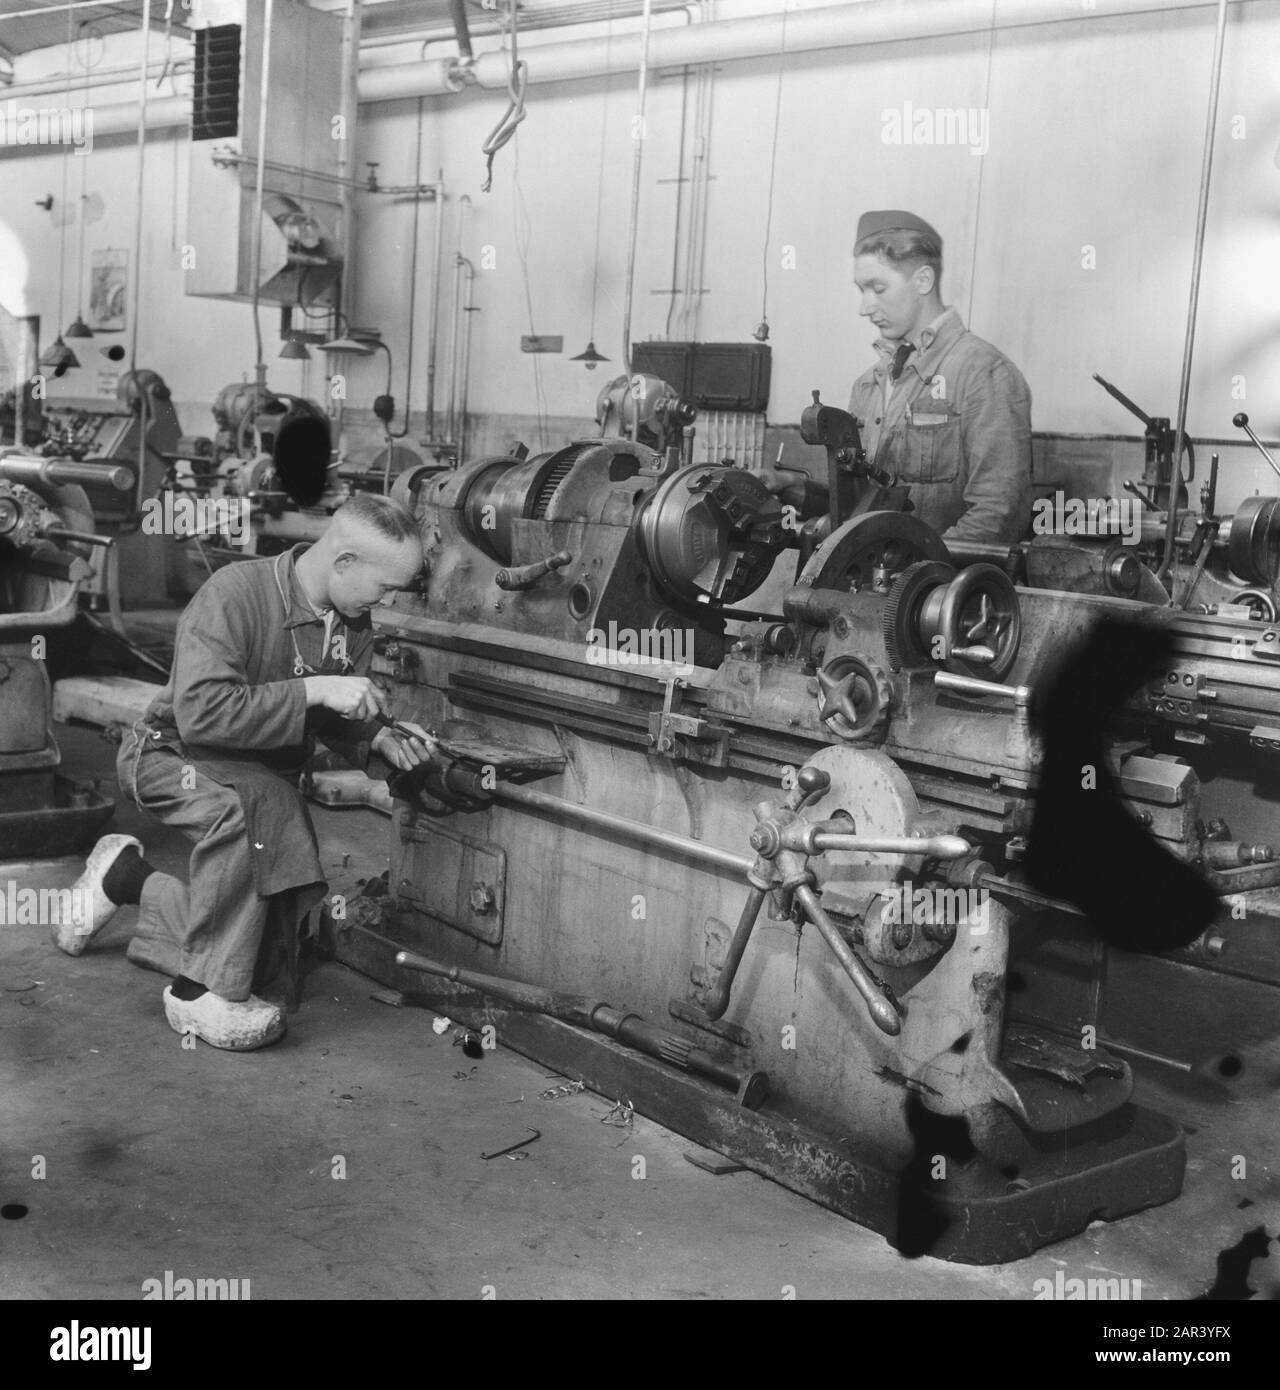 Rijwielfabriek Gazelle te Dieren Data: 20 Marzo 1946 luogo: Animale Parole Chiave: Fabbriche di biciclette Foto Stock